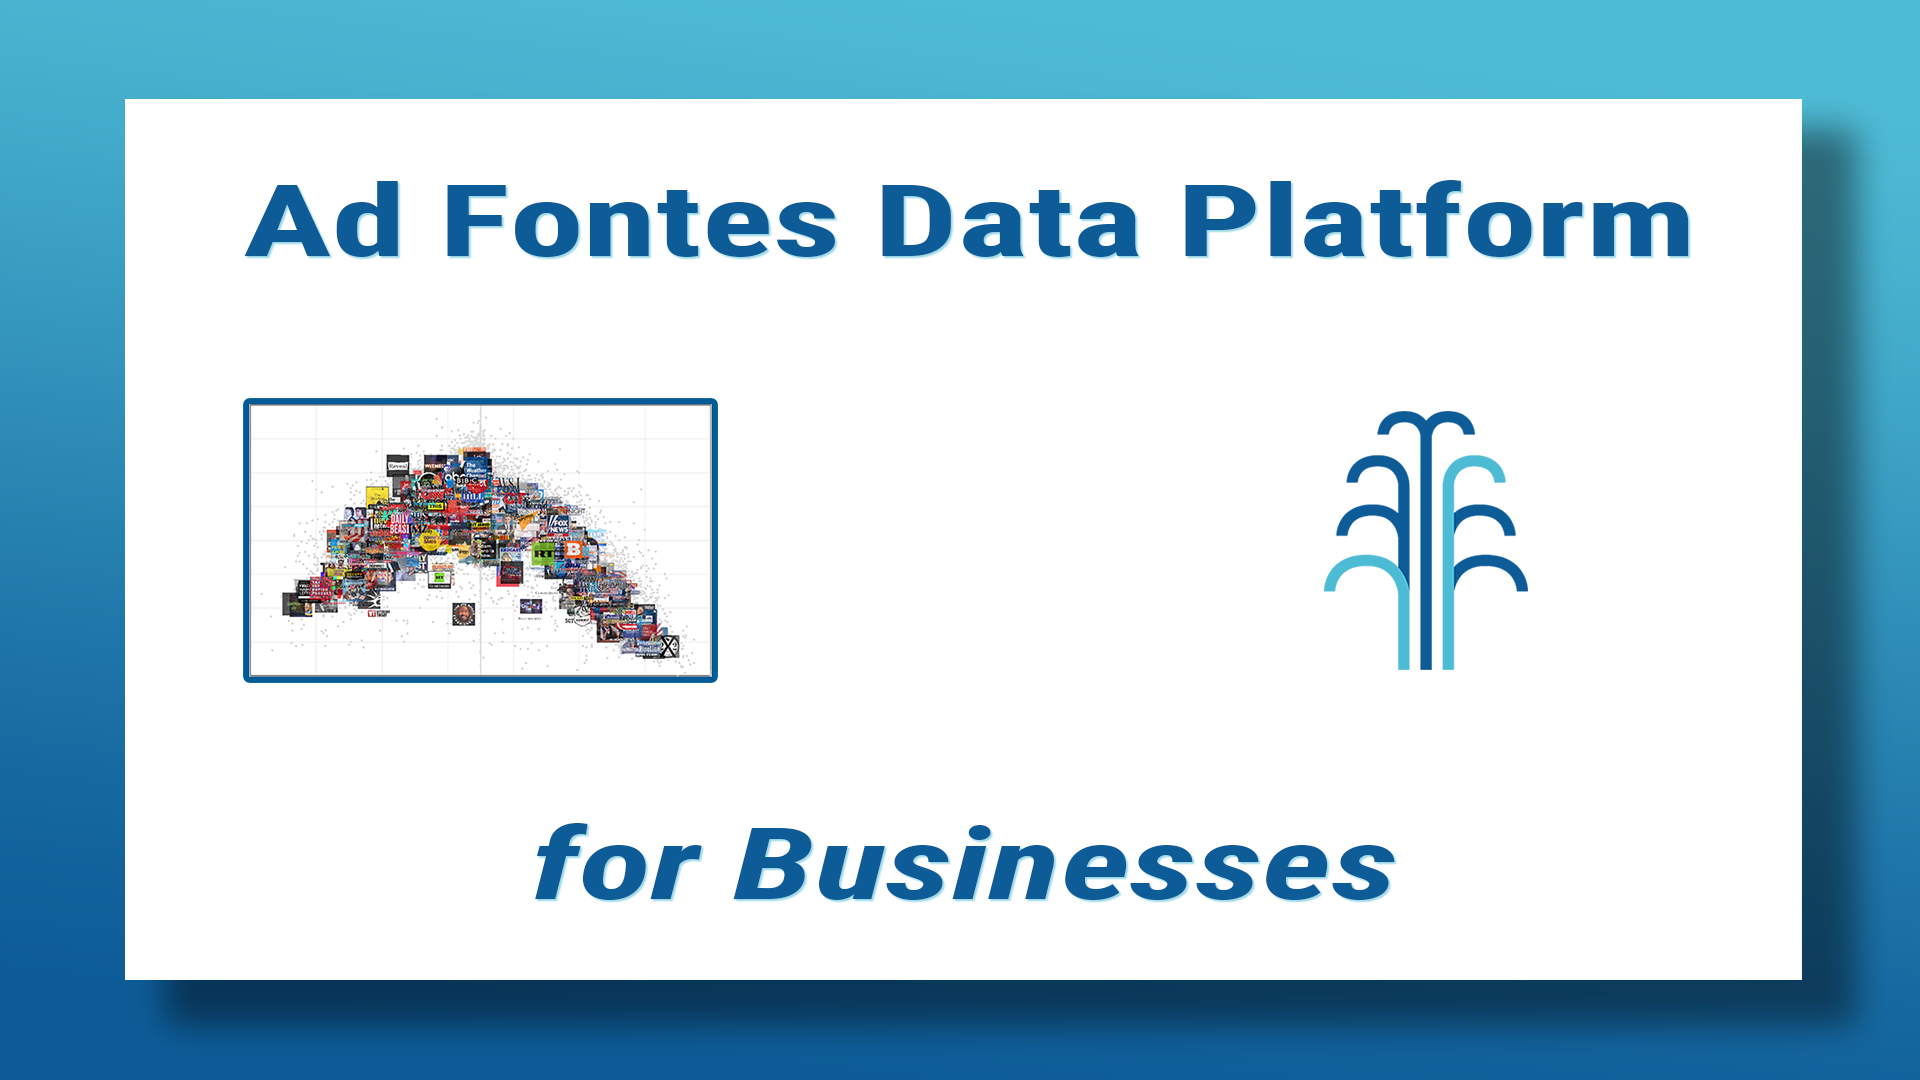 Ad Fontes Data Platform for Businesses